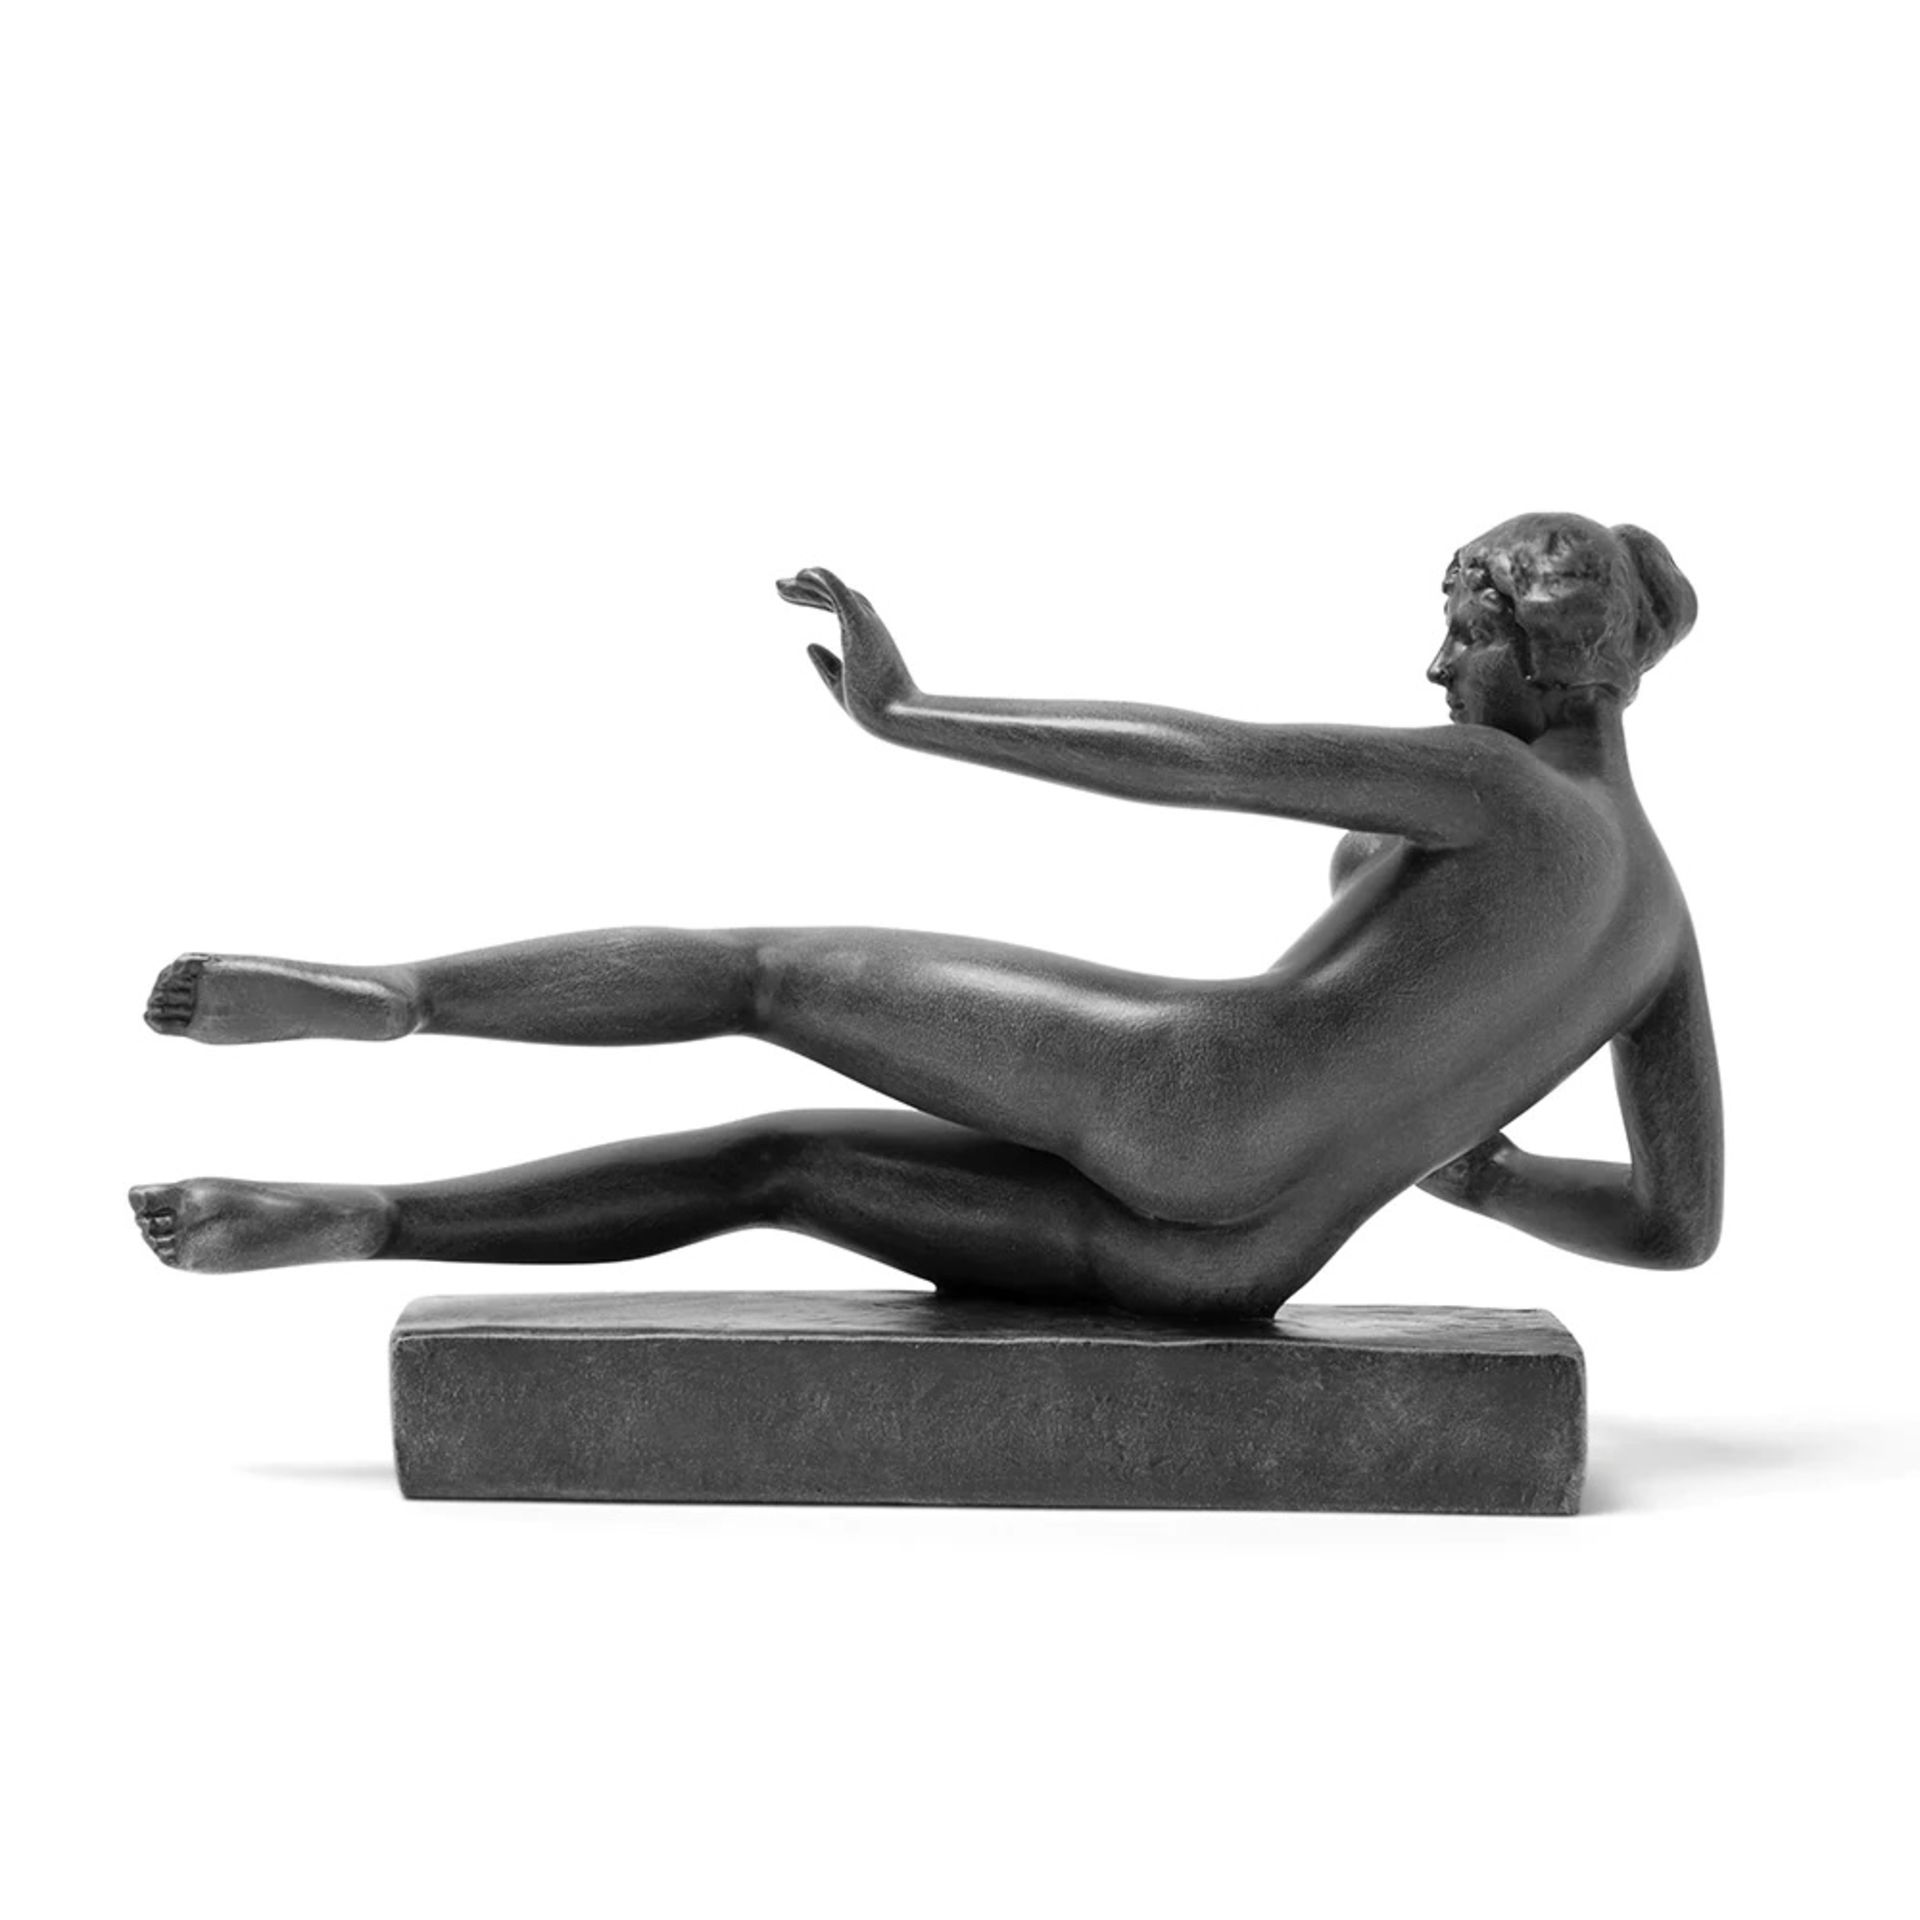 Aristide Maillol "L'Air" Sculpture - Image 2 of 2